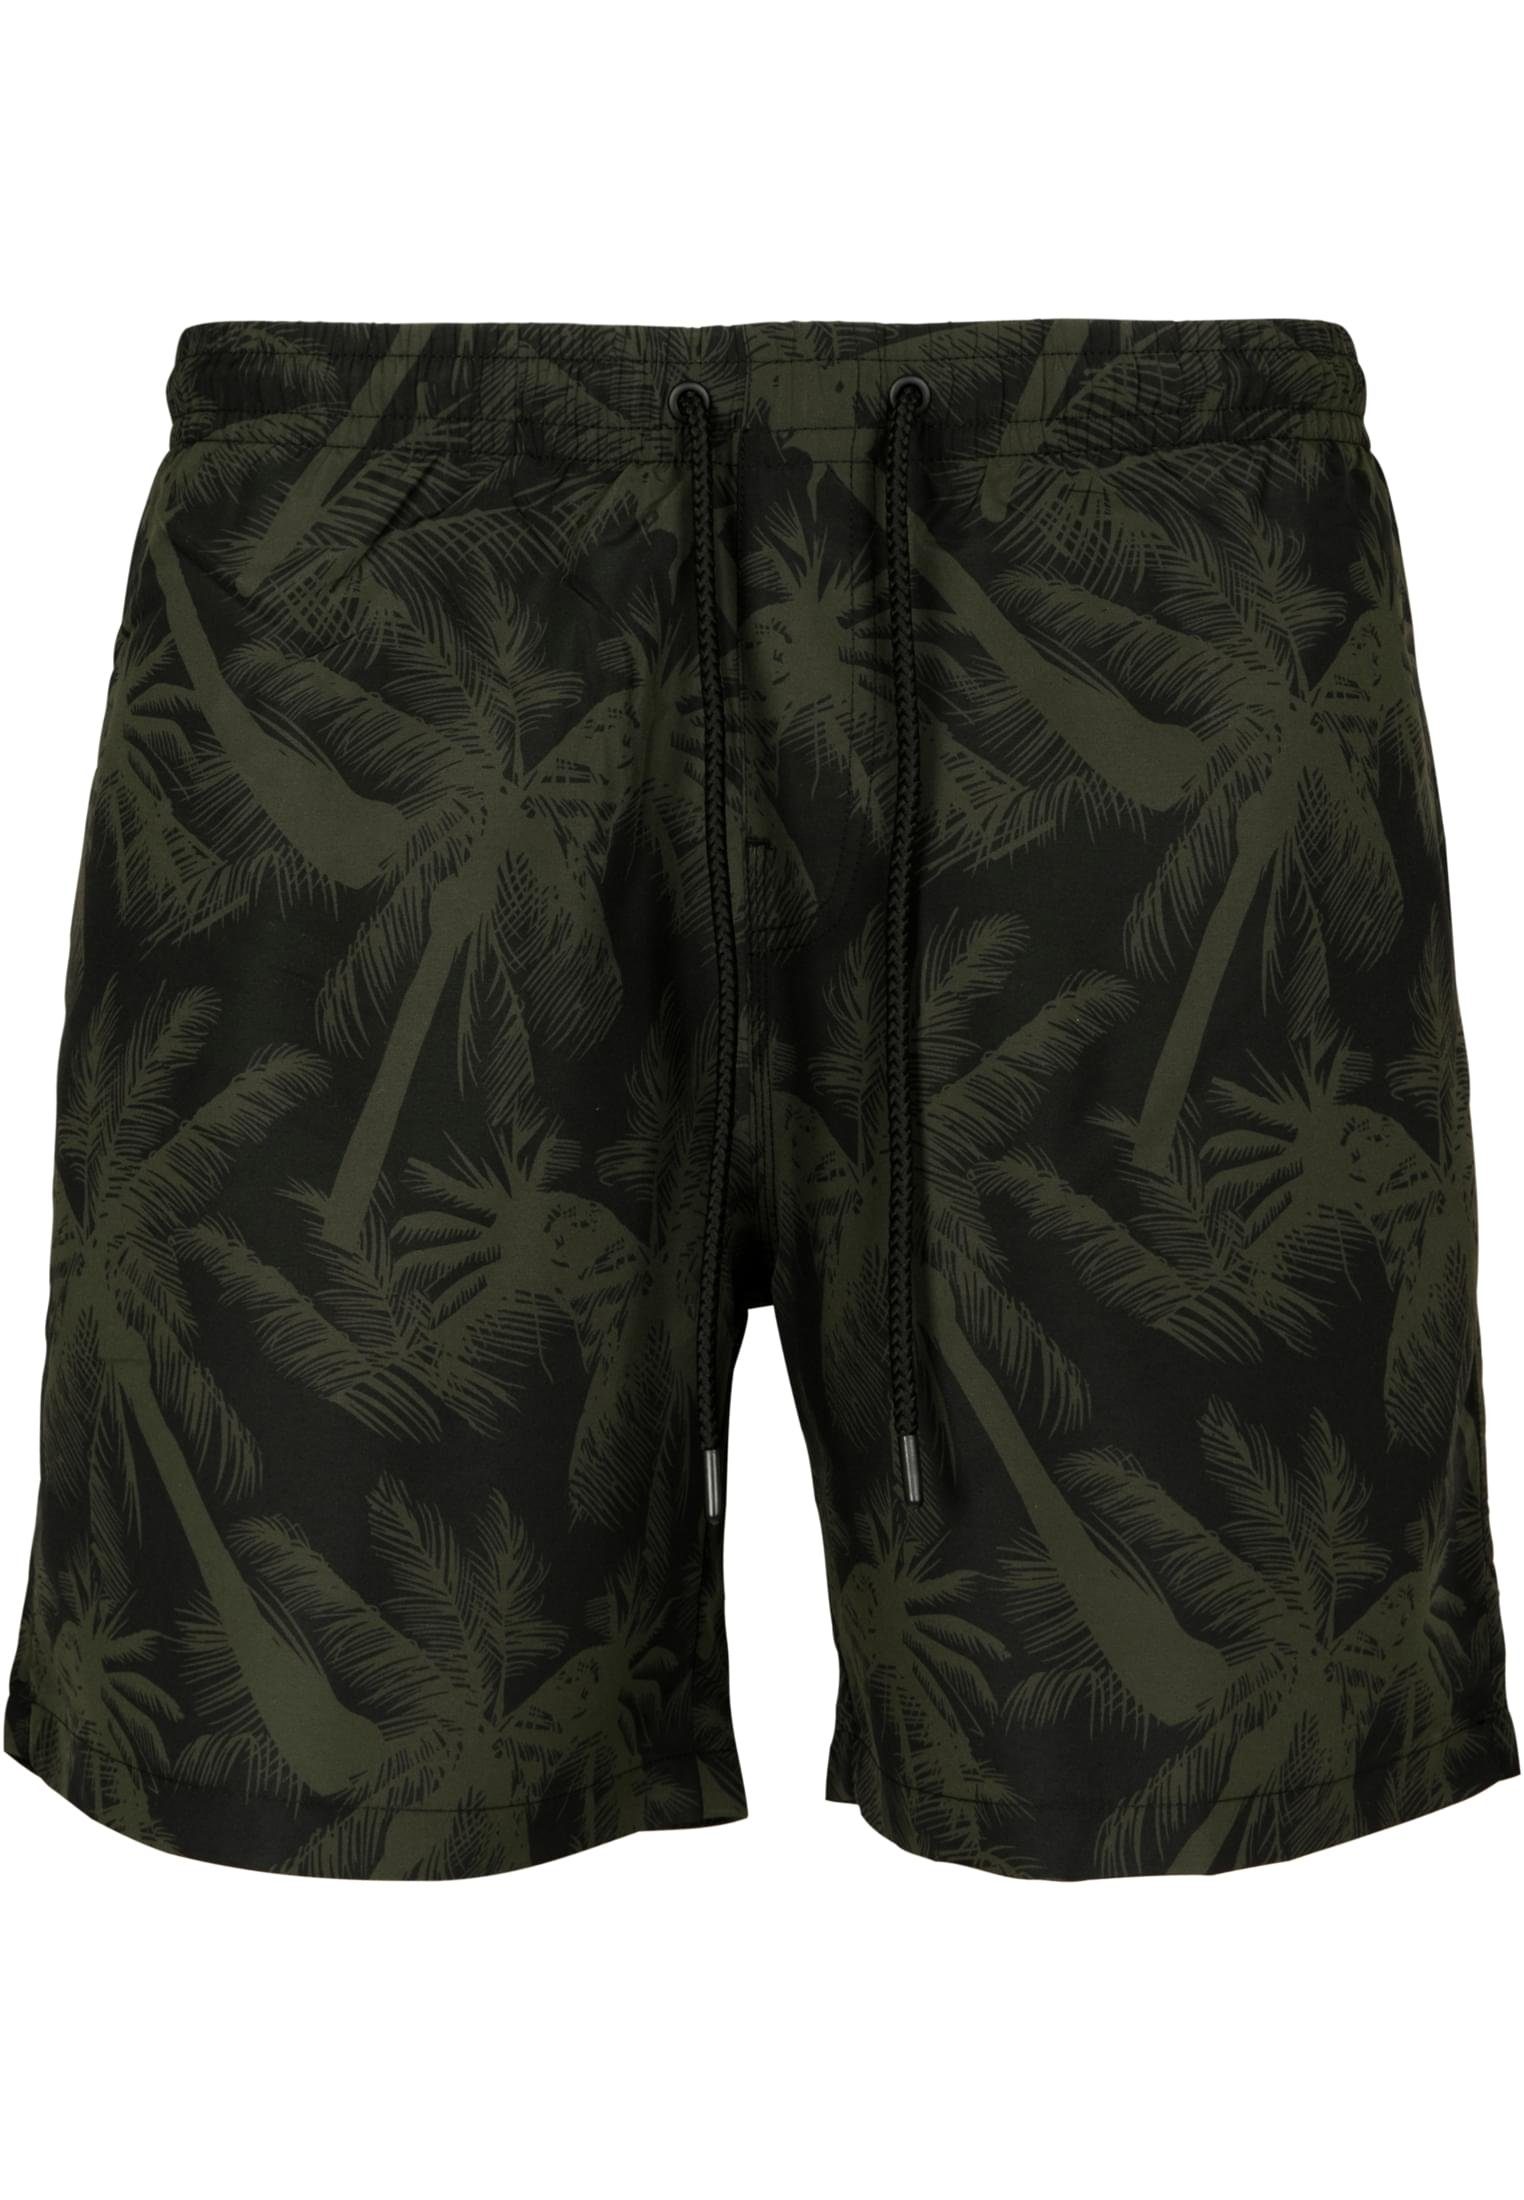 URBAN CLASSICS Shorts Badeshorts Pattern Herren palm/olive Swim